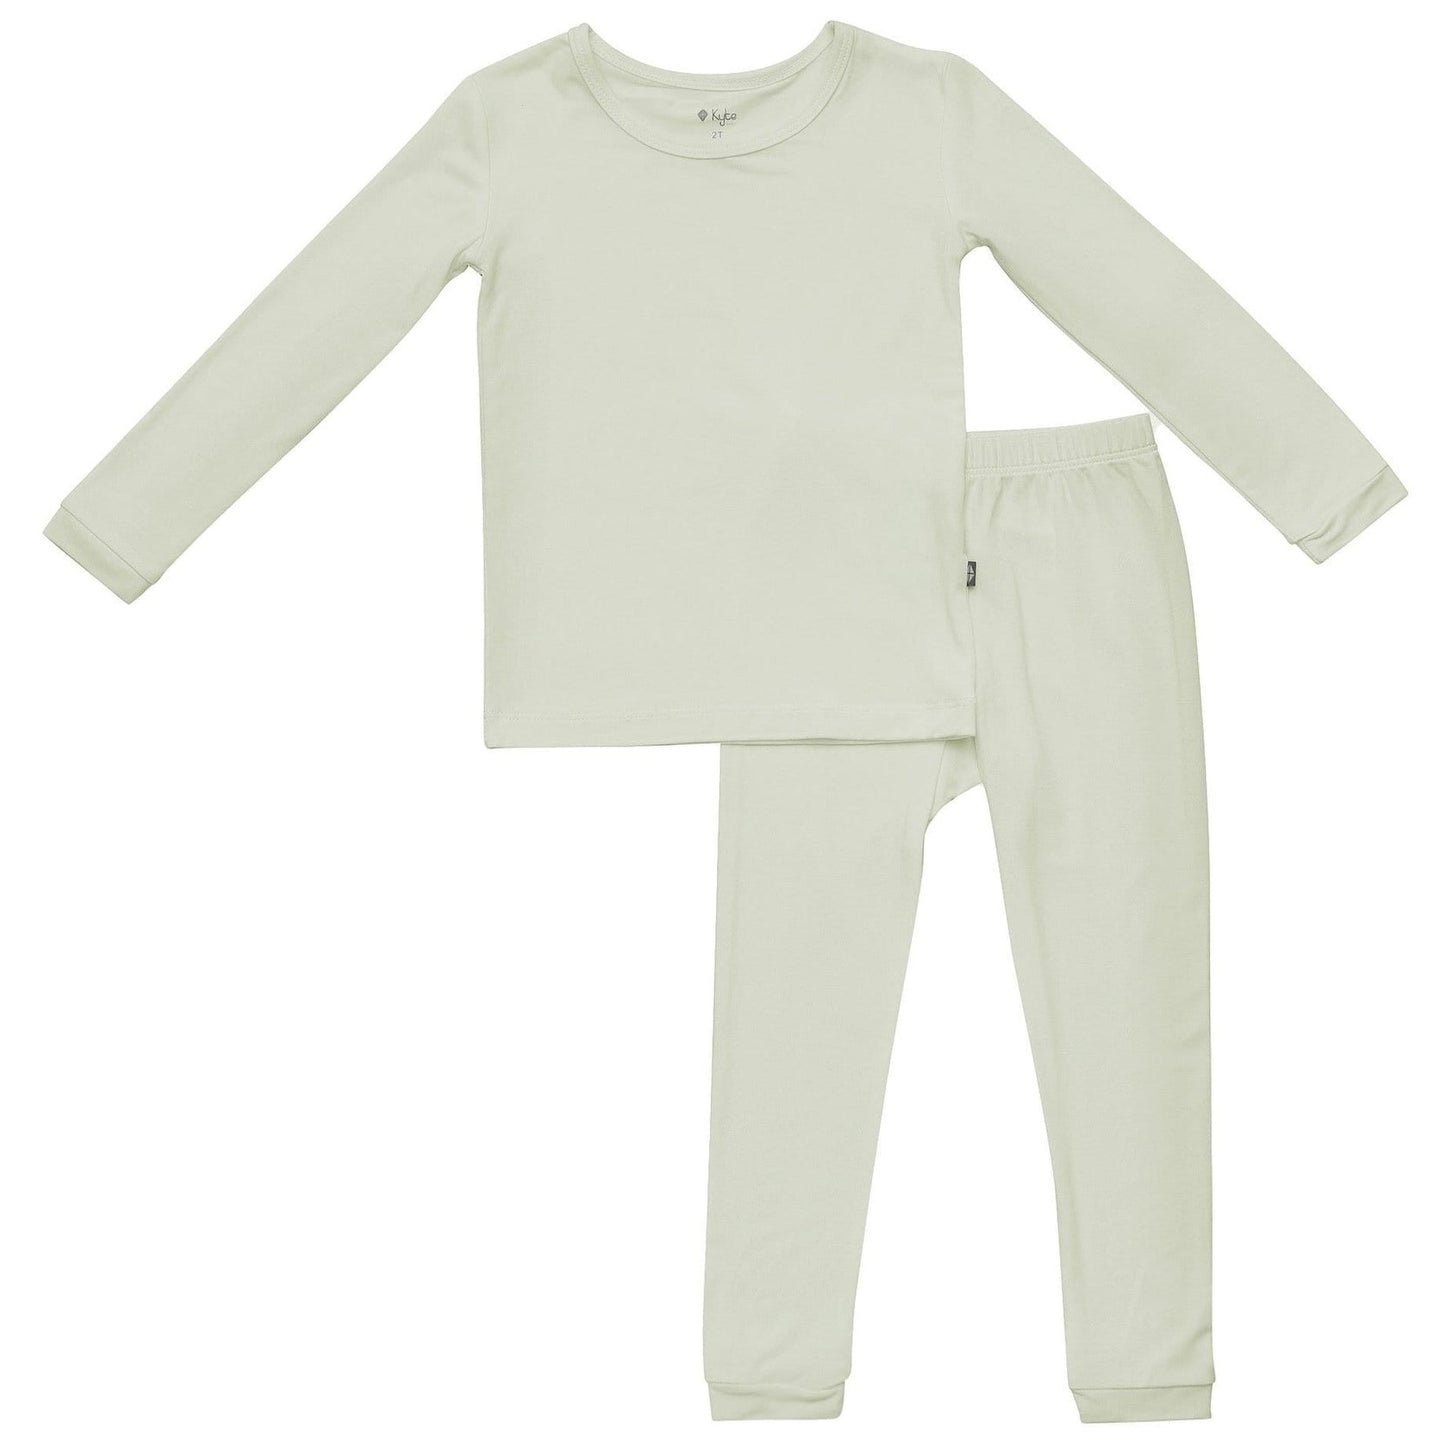 Aloe Toddler Pajama Set